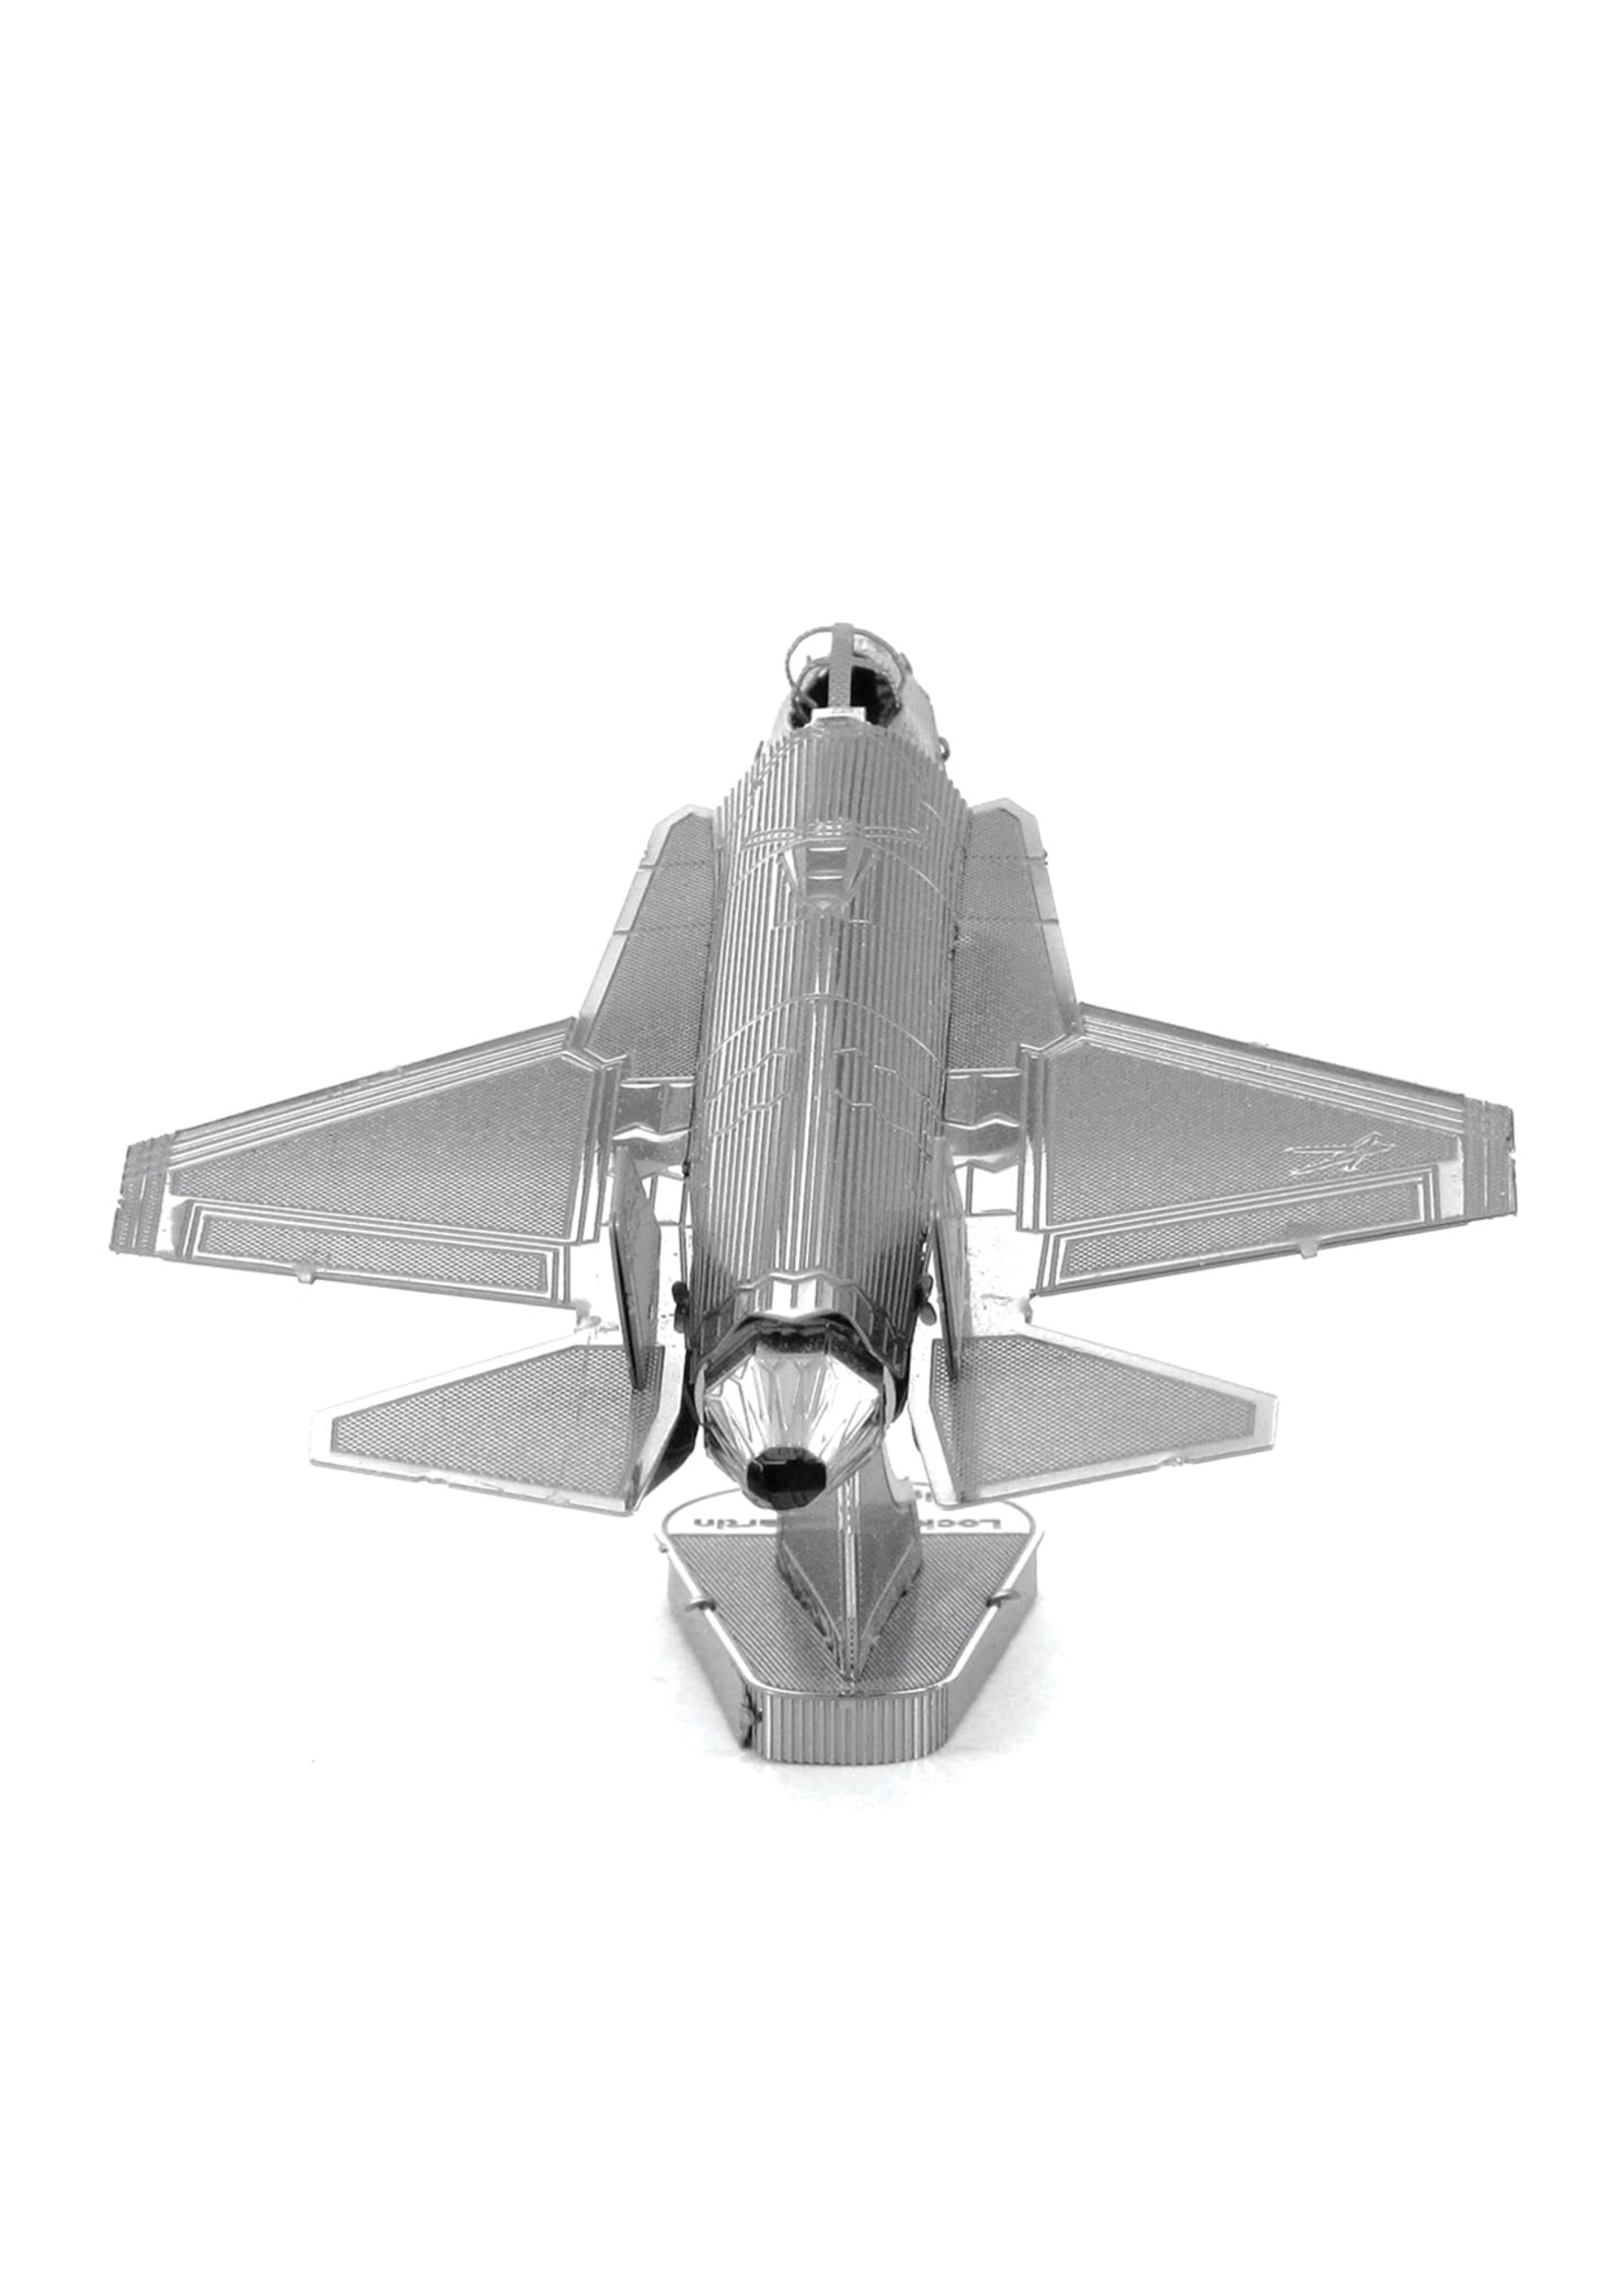 Fascinations Metal Earth - F-35A Lightning II